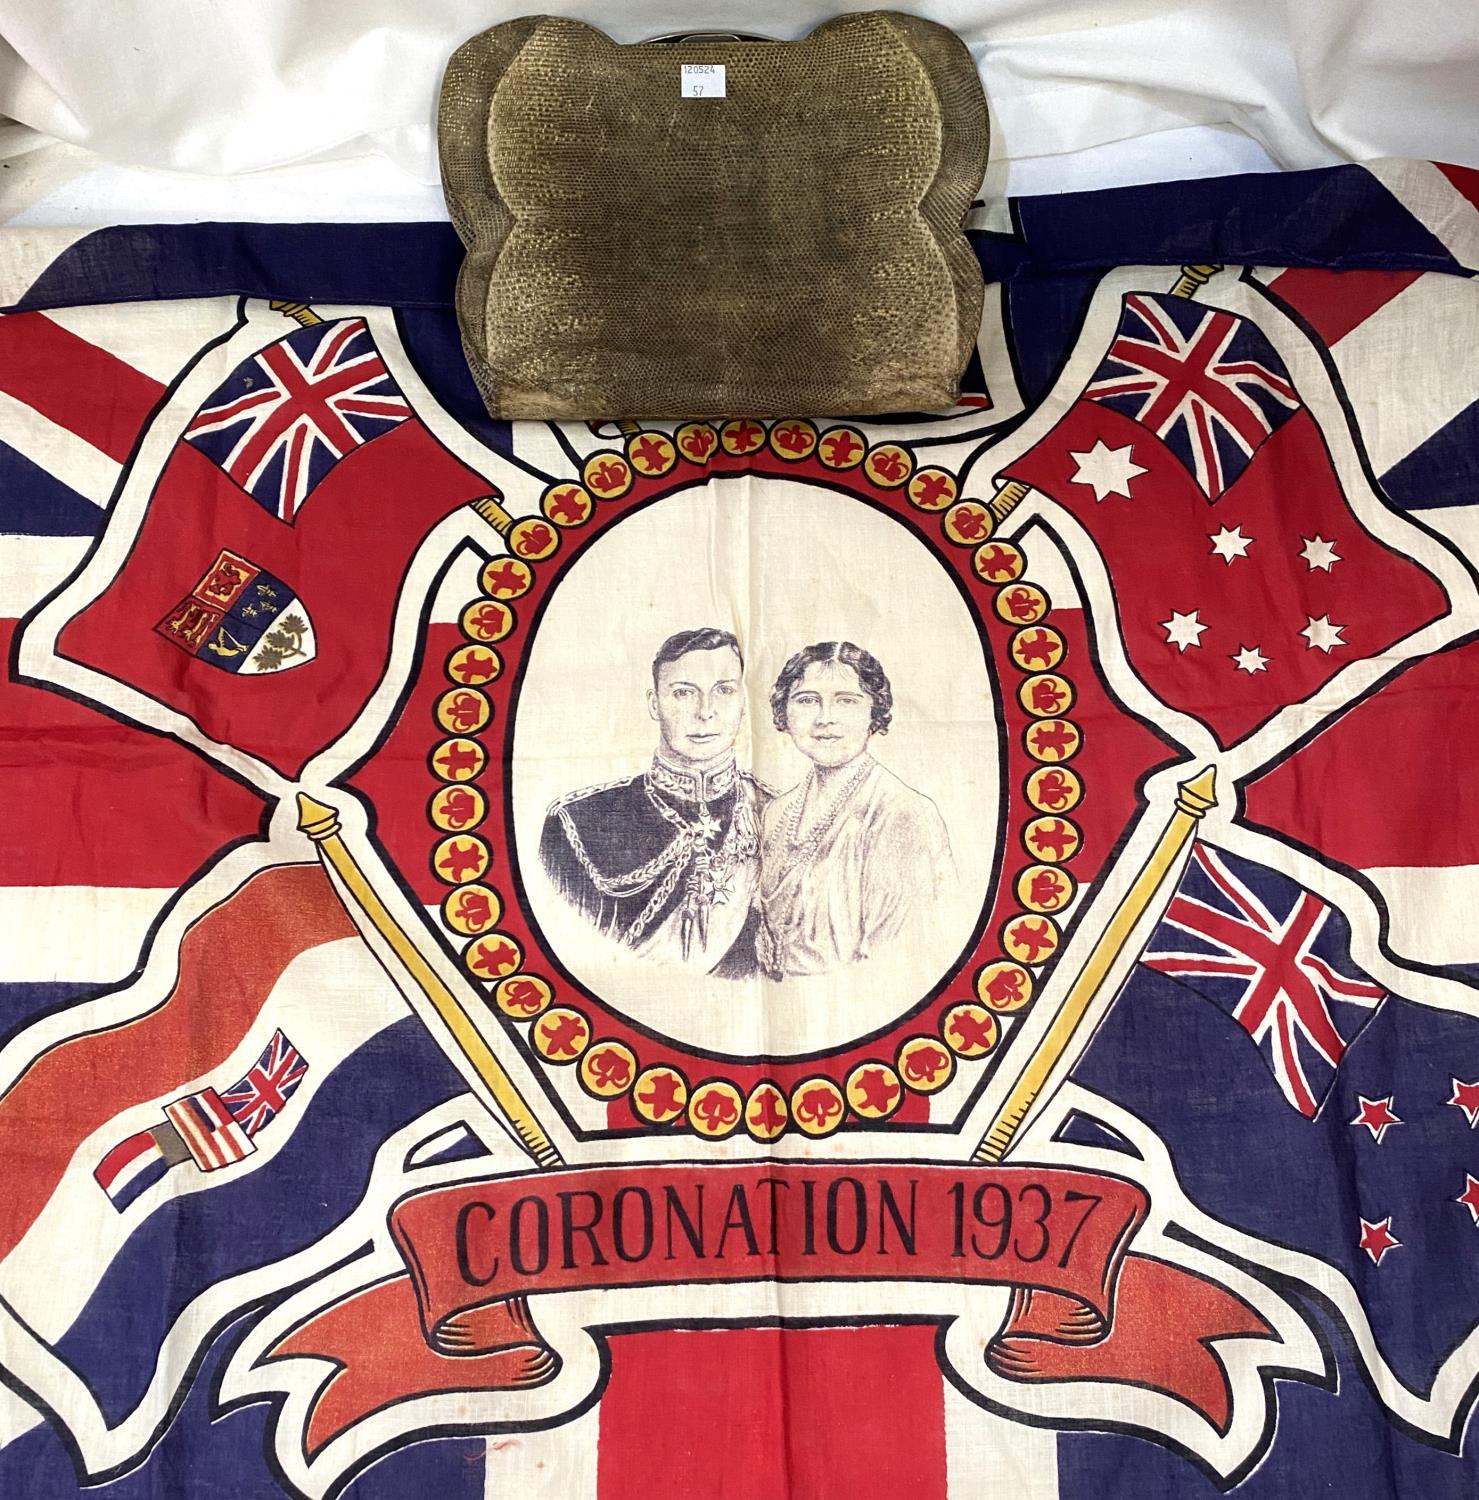 A vintage 1930's snake skin handbag; A George VI and Queen Elizabeth 1937 Coronation Union flag - Image 3 of 3